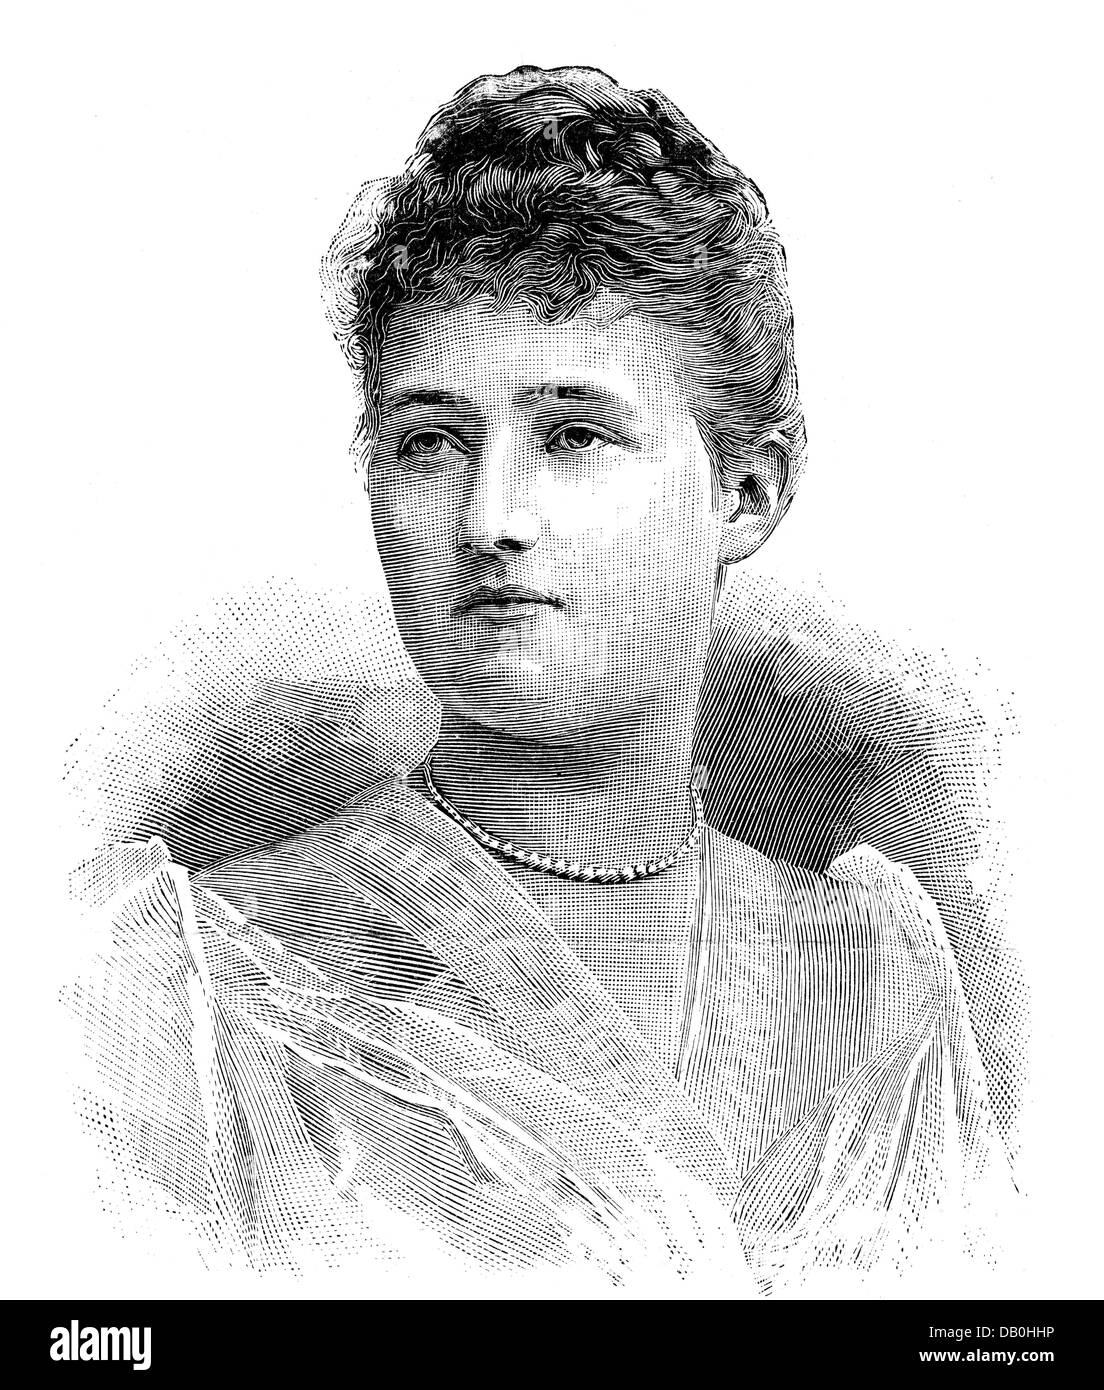 Bathildis, 21.5.1873 - 6.4.1962, Princess of Waldeck and Pyrmont 9.8.1895 - 13.11.1918, portrait, wood engraving, 1894, Stock Photo